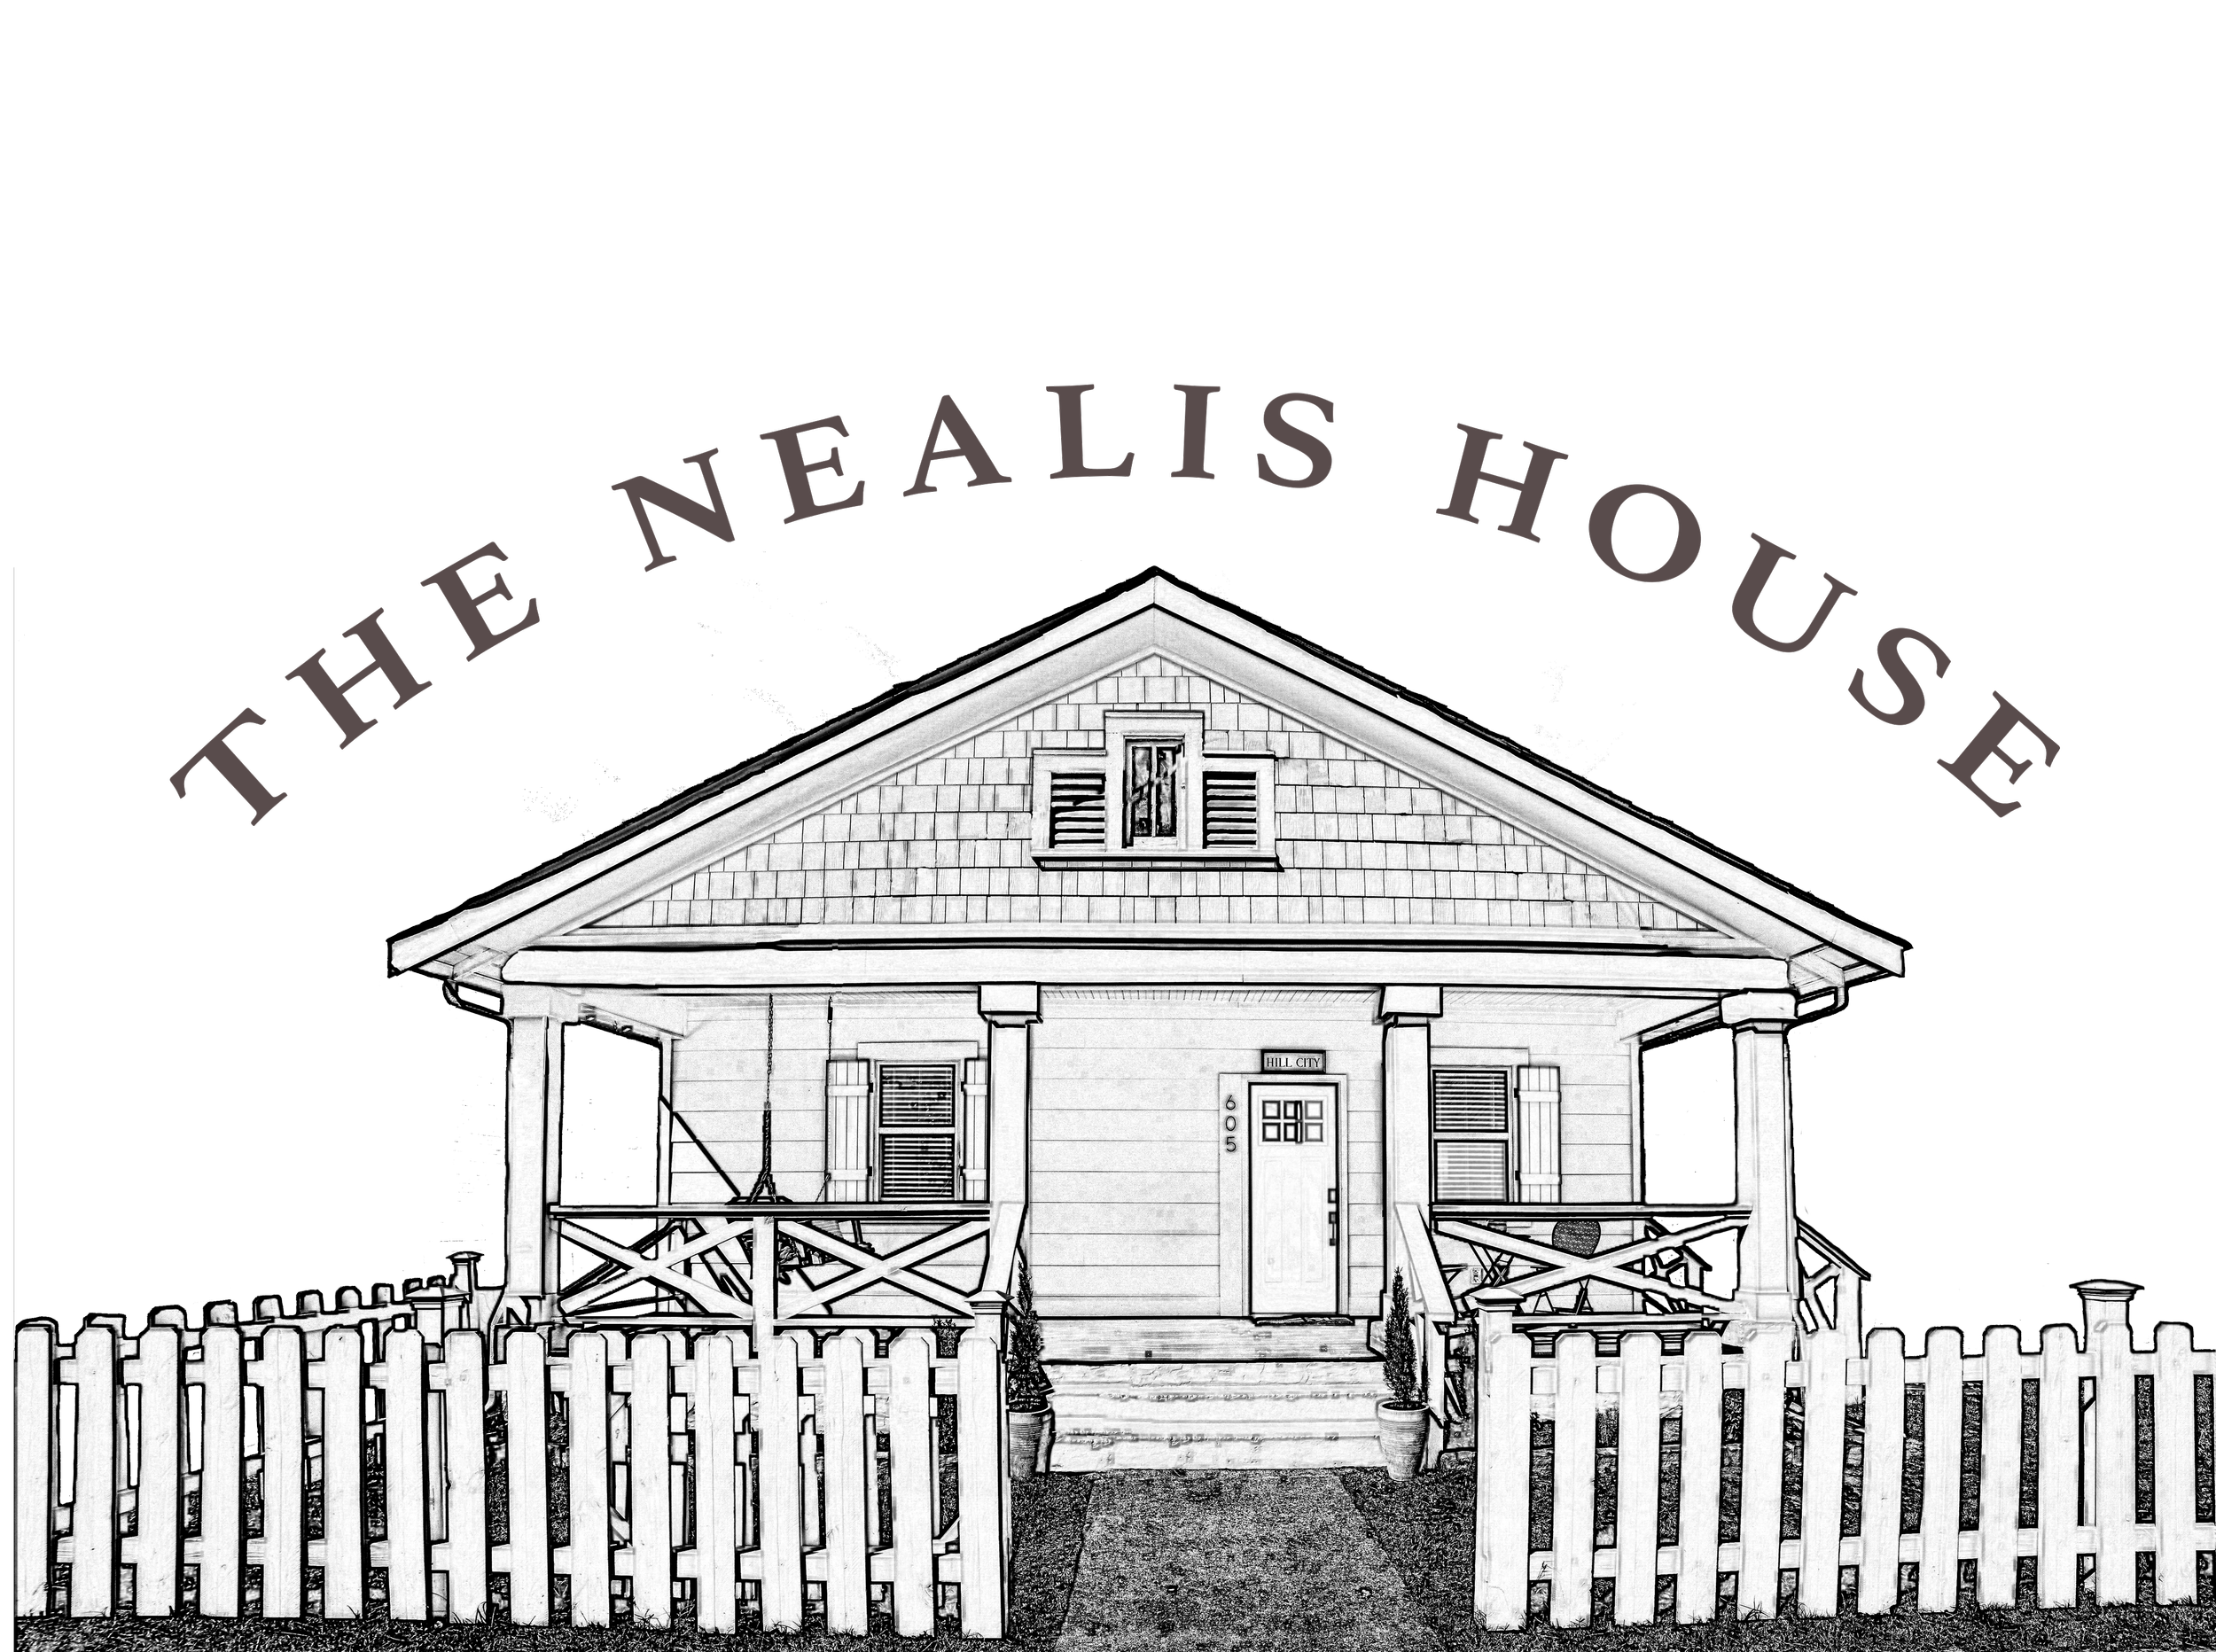 The Nealis House